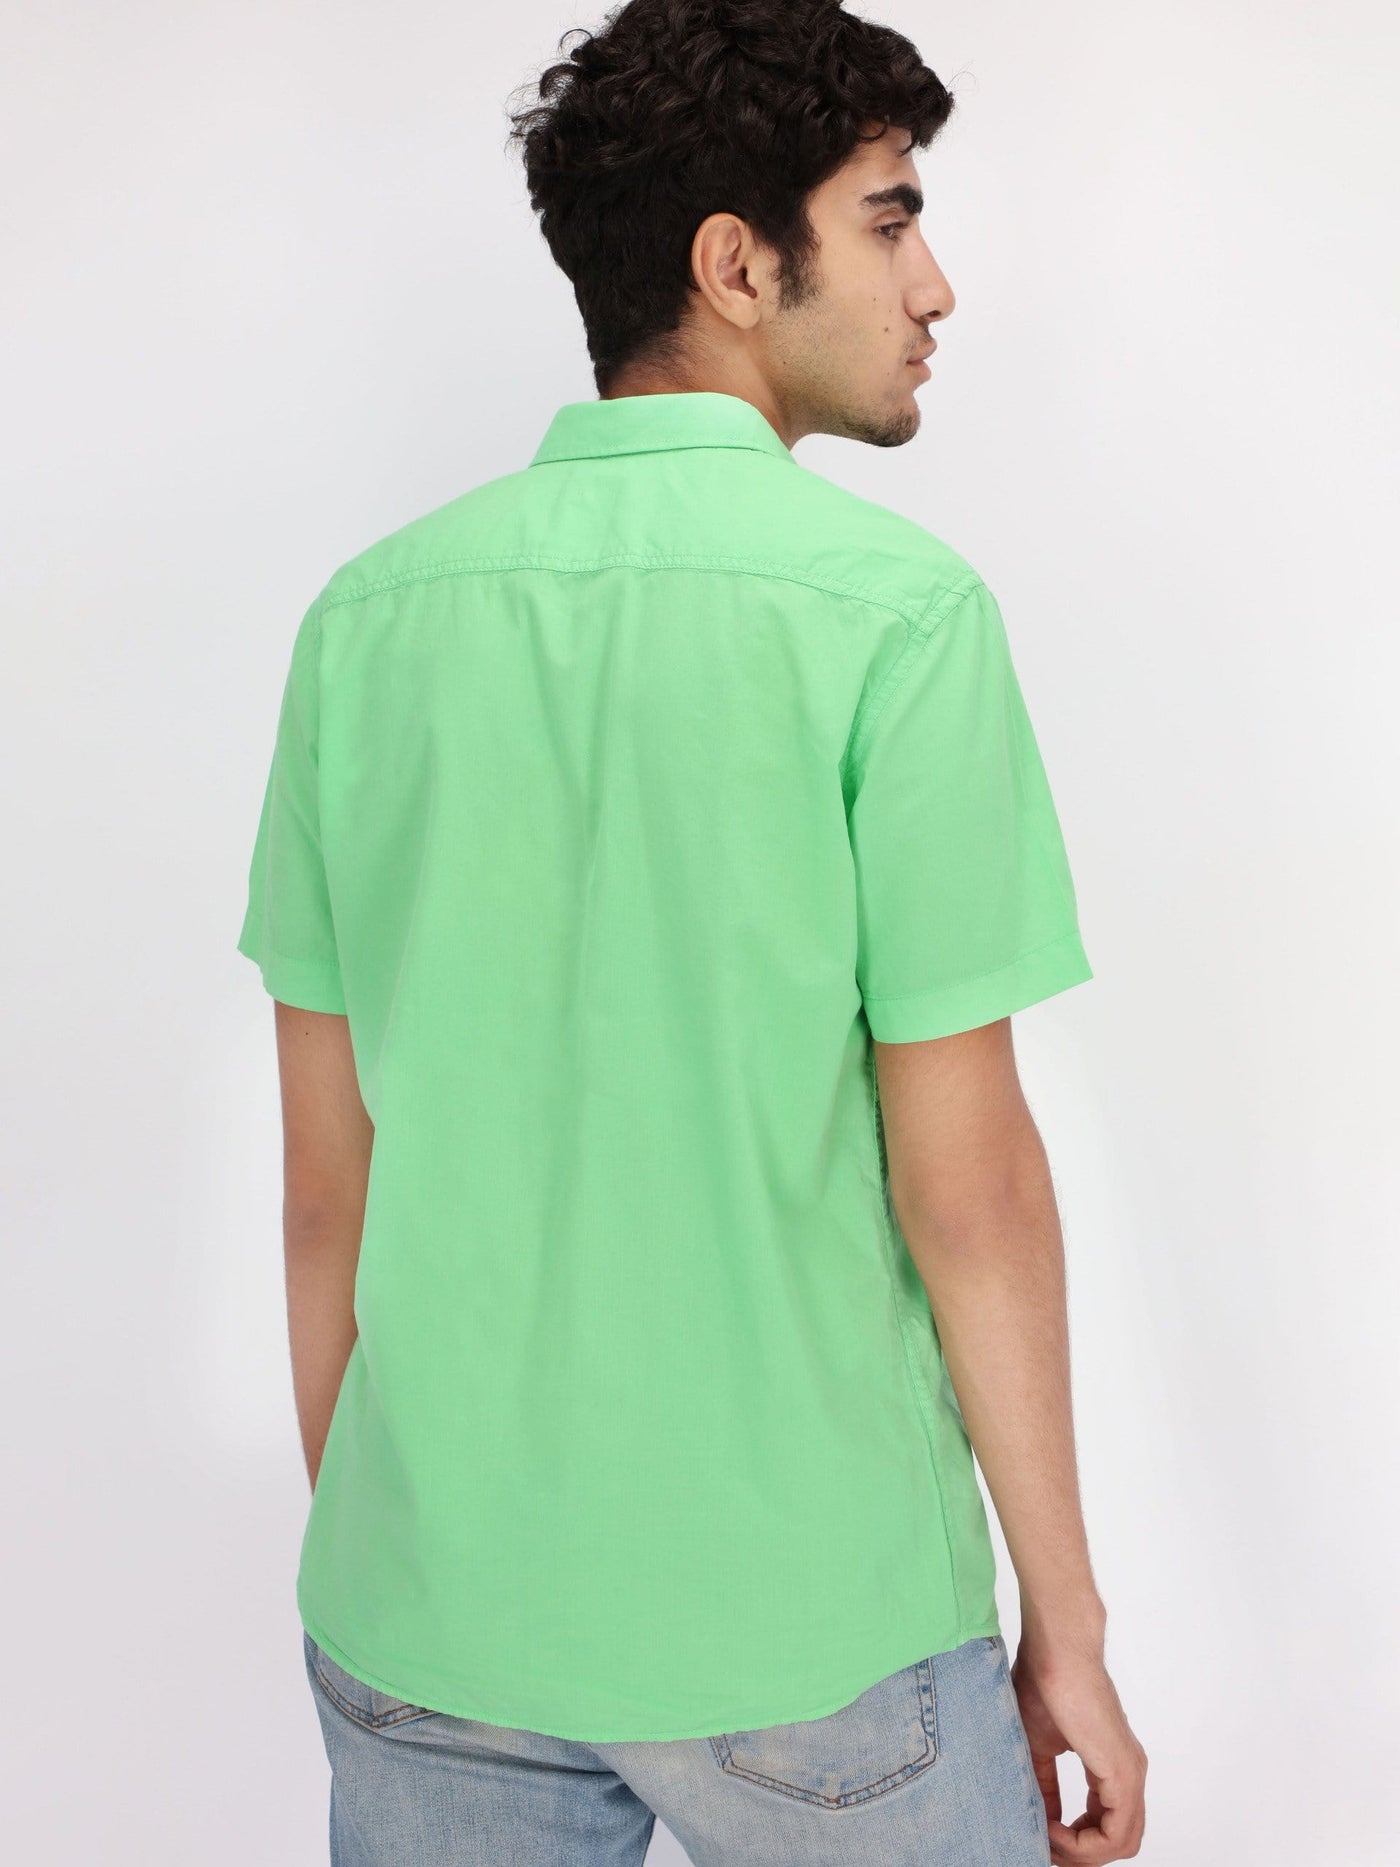 OR Shirts Basic Short Sleeve Turn-Down Collar Shirt